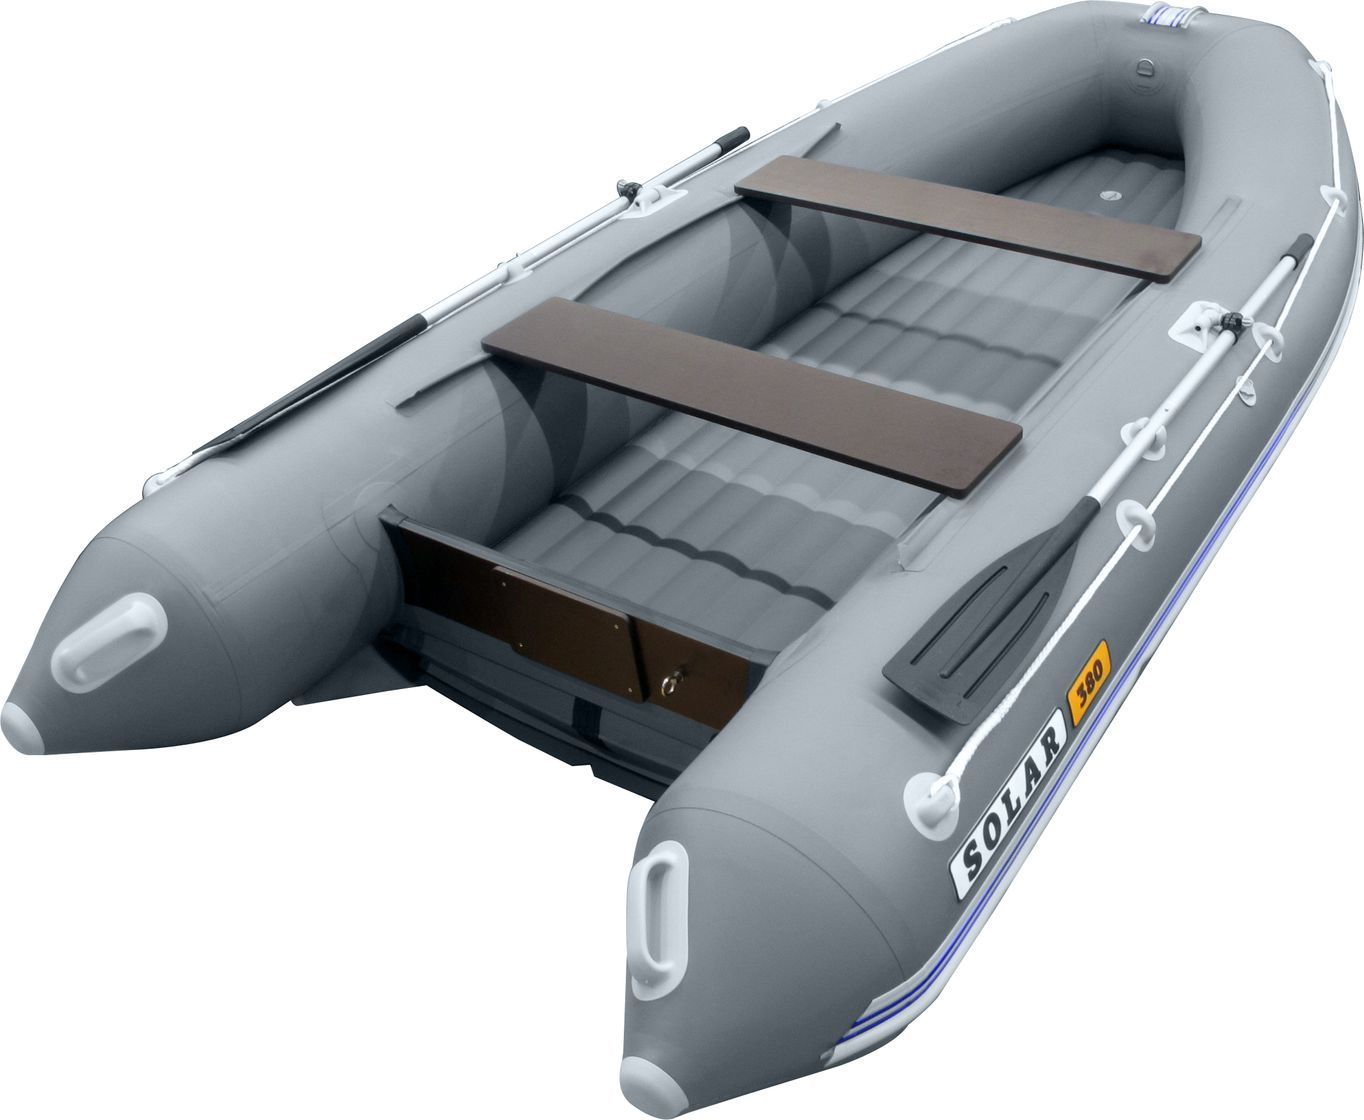 Надувная лодка ПВХ SOLAR-330 К (Оптима), серый SLR330k_opt_grey надувная лодка пвх solar 330 к оптима оранжевый slr330k opt orange